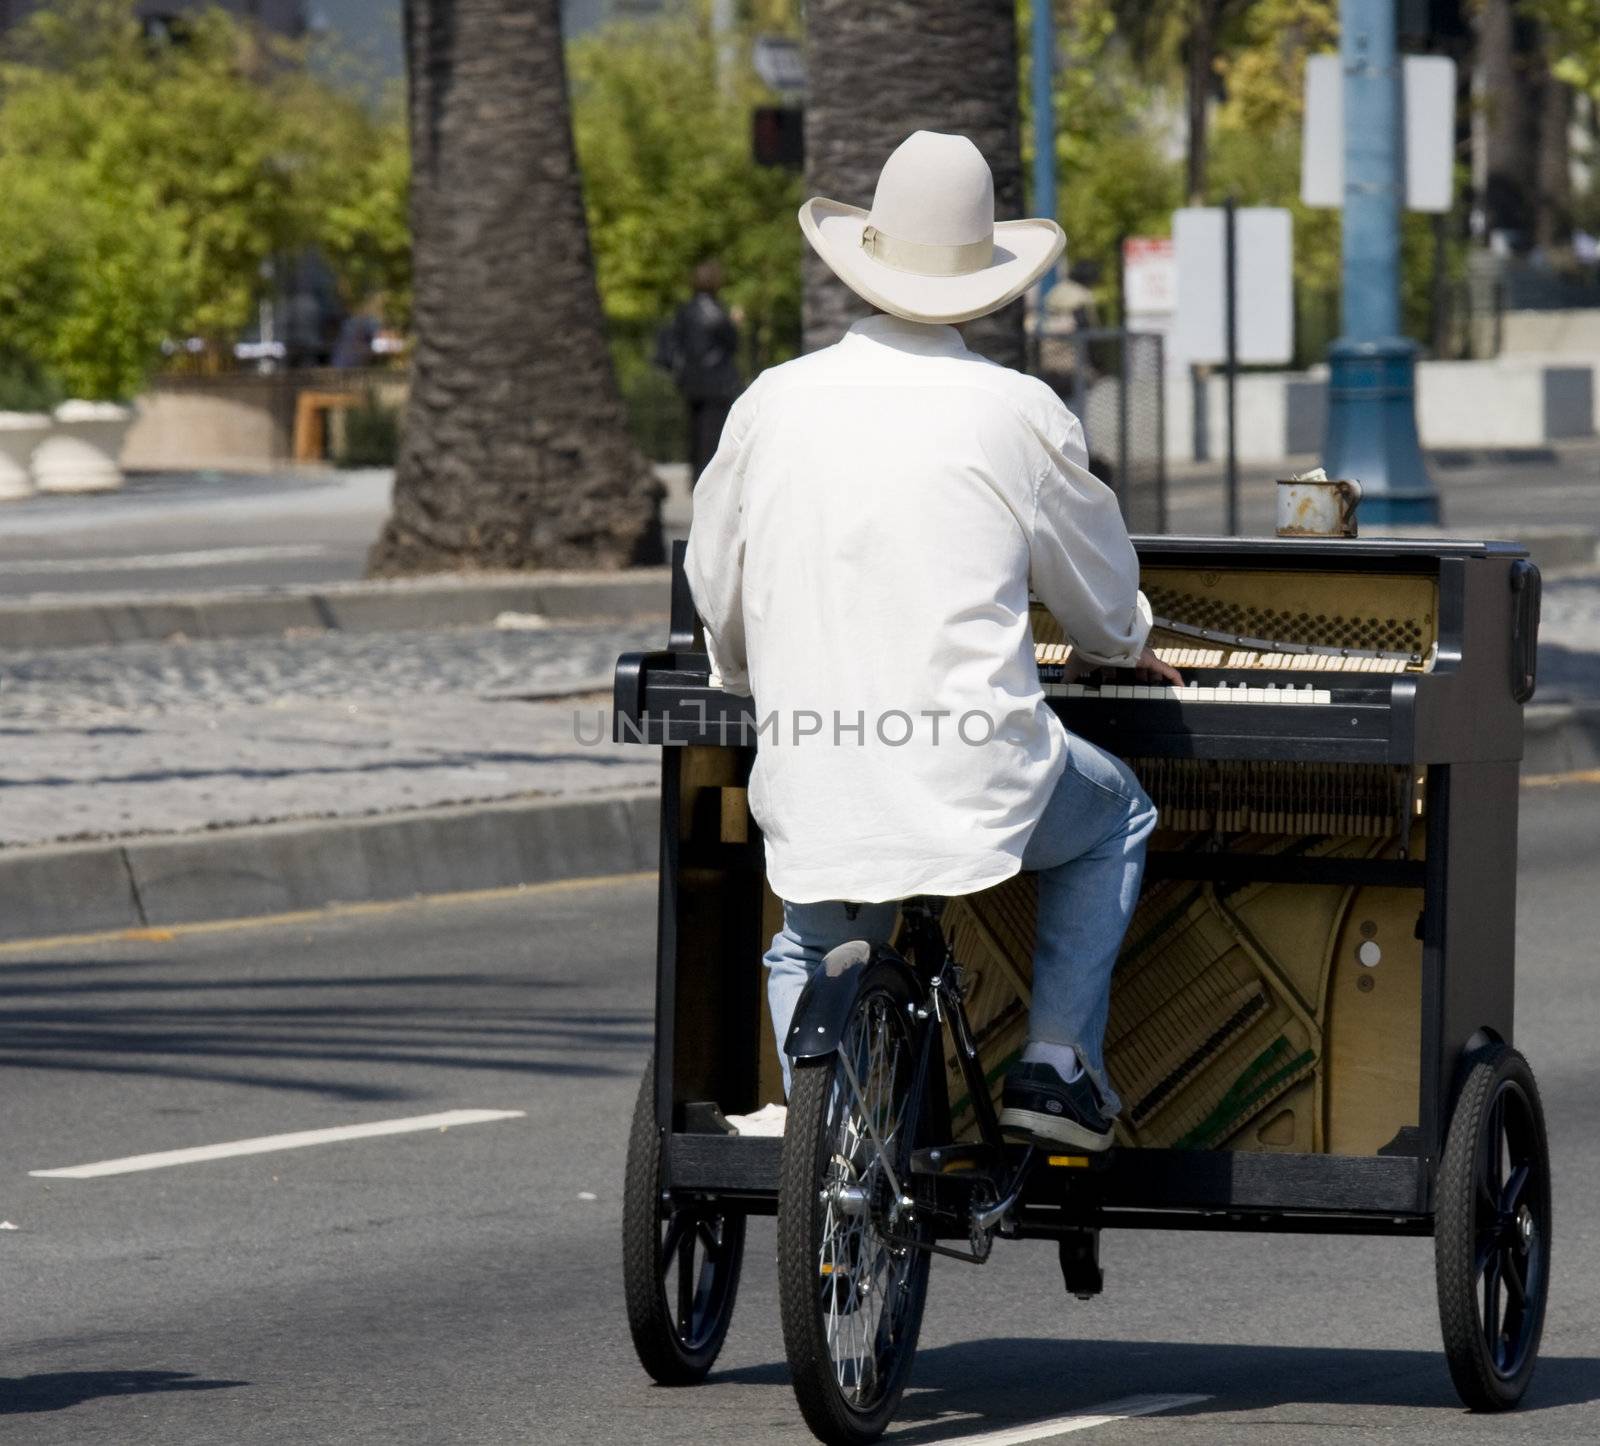 guy on piano bike by LWPhotog